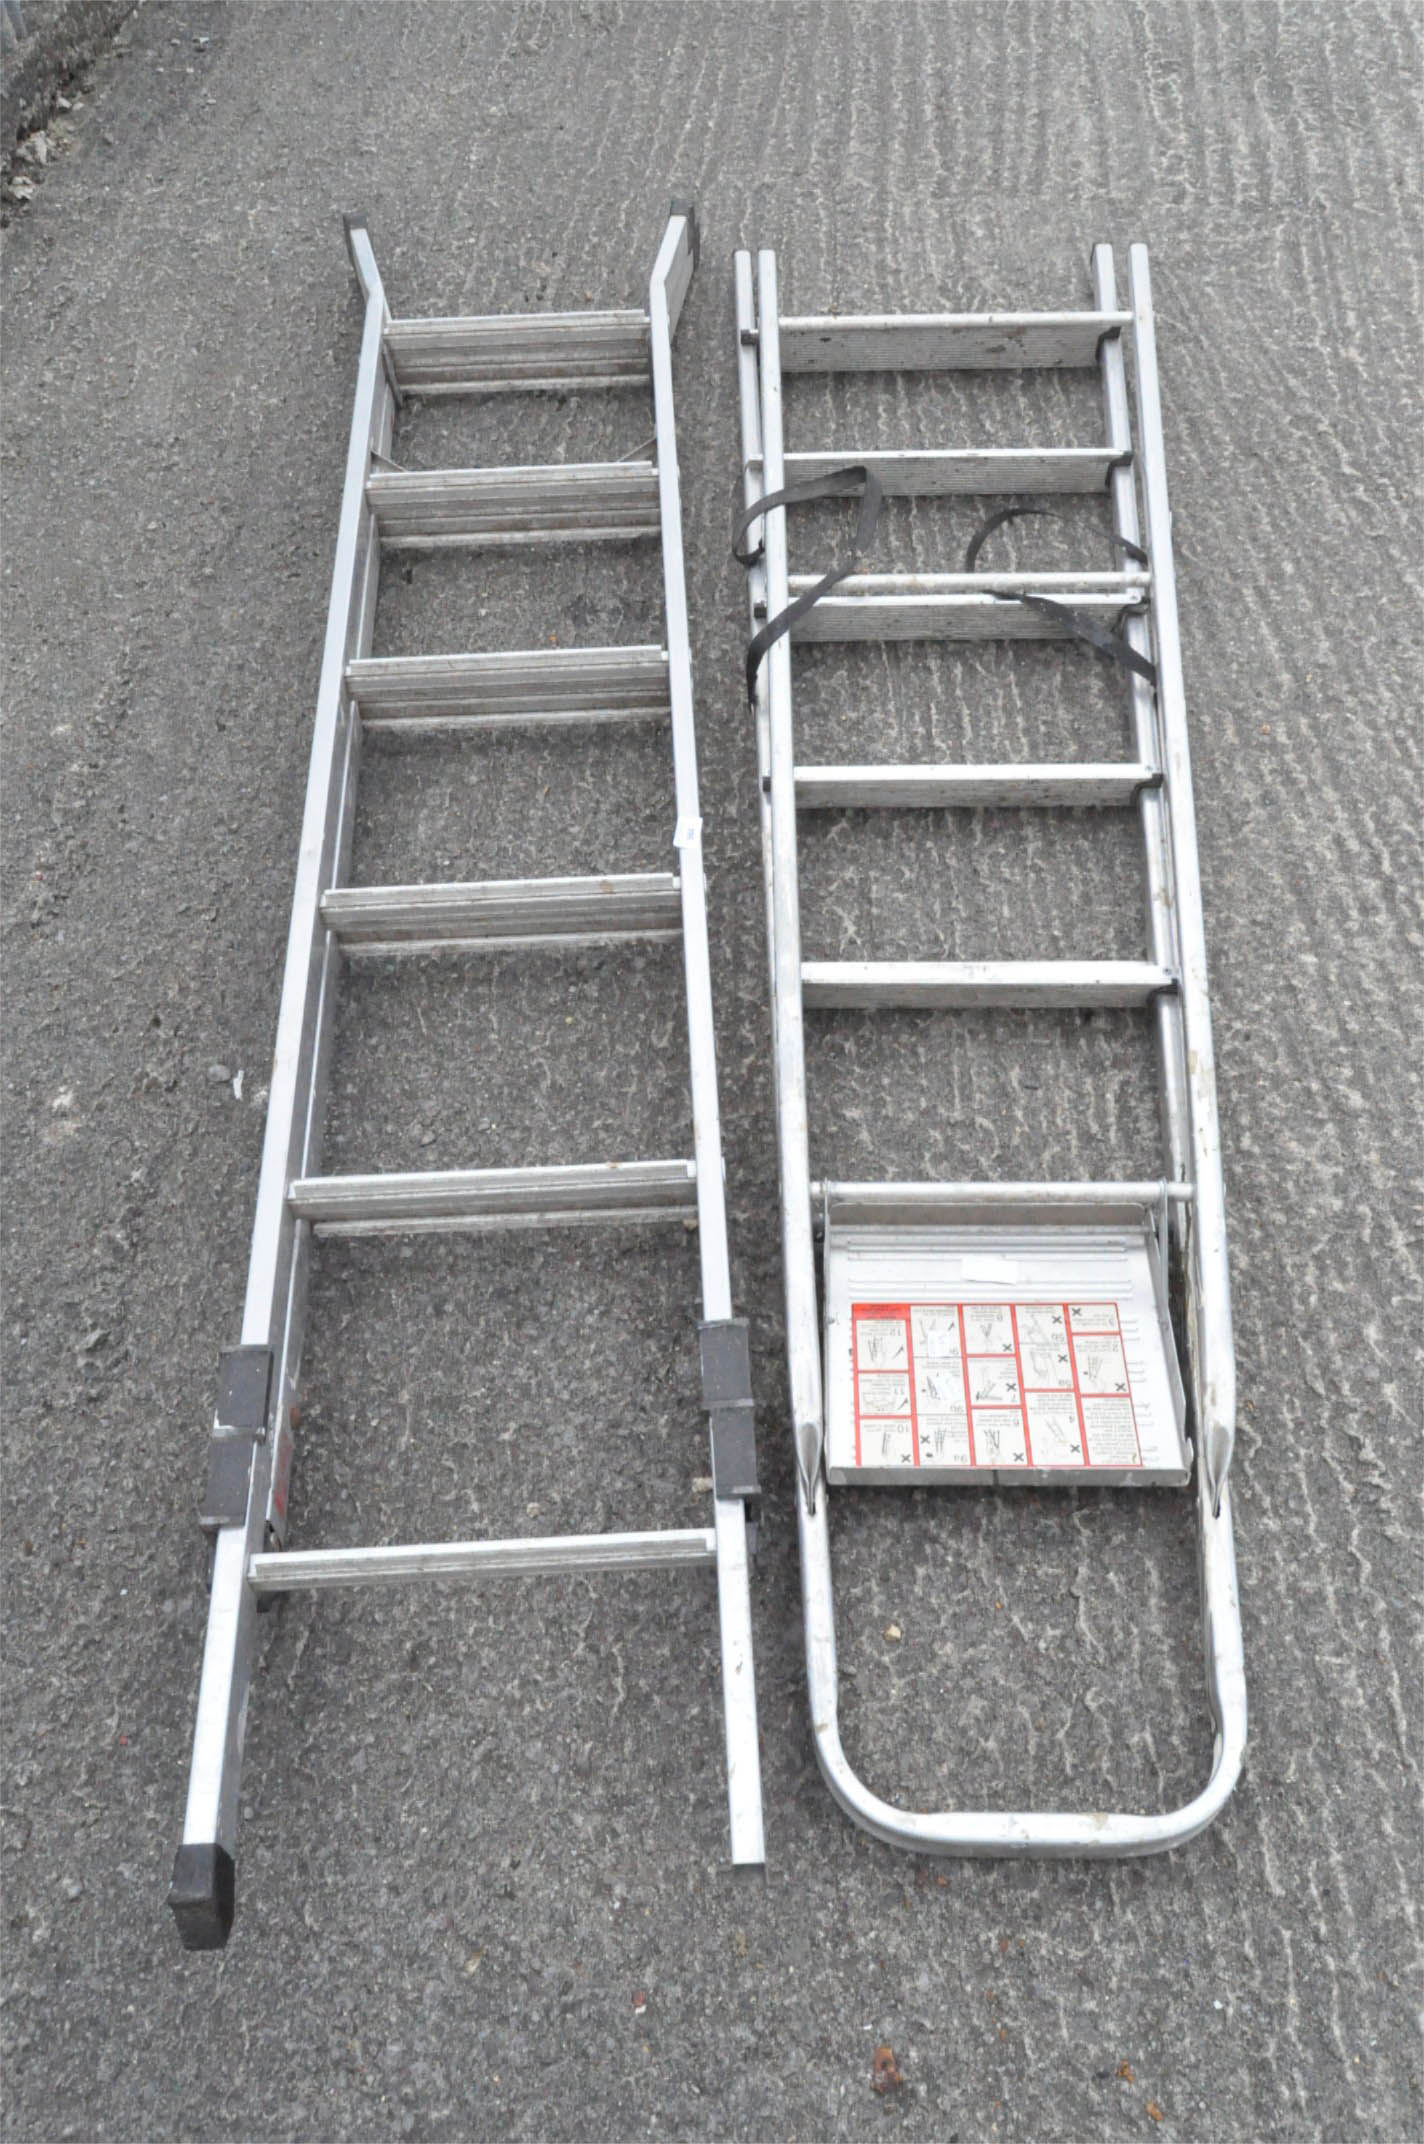 Two sets of aluminium ladders